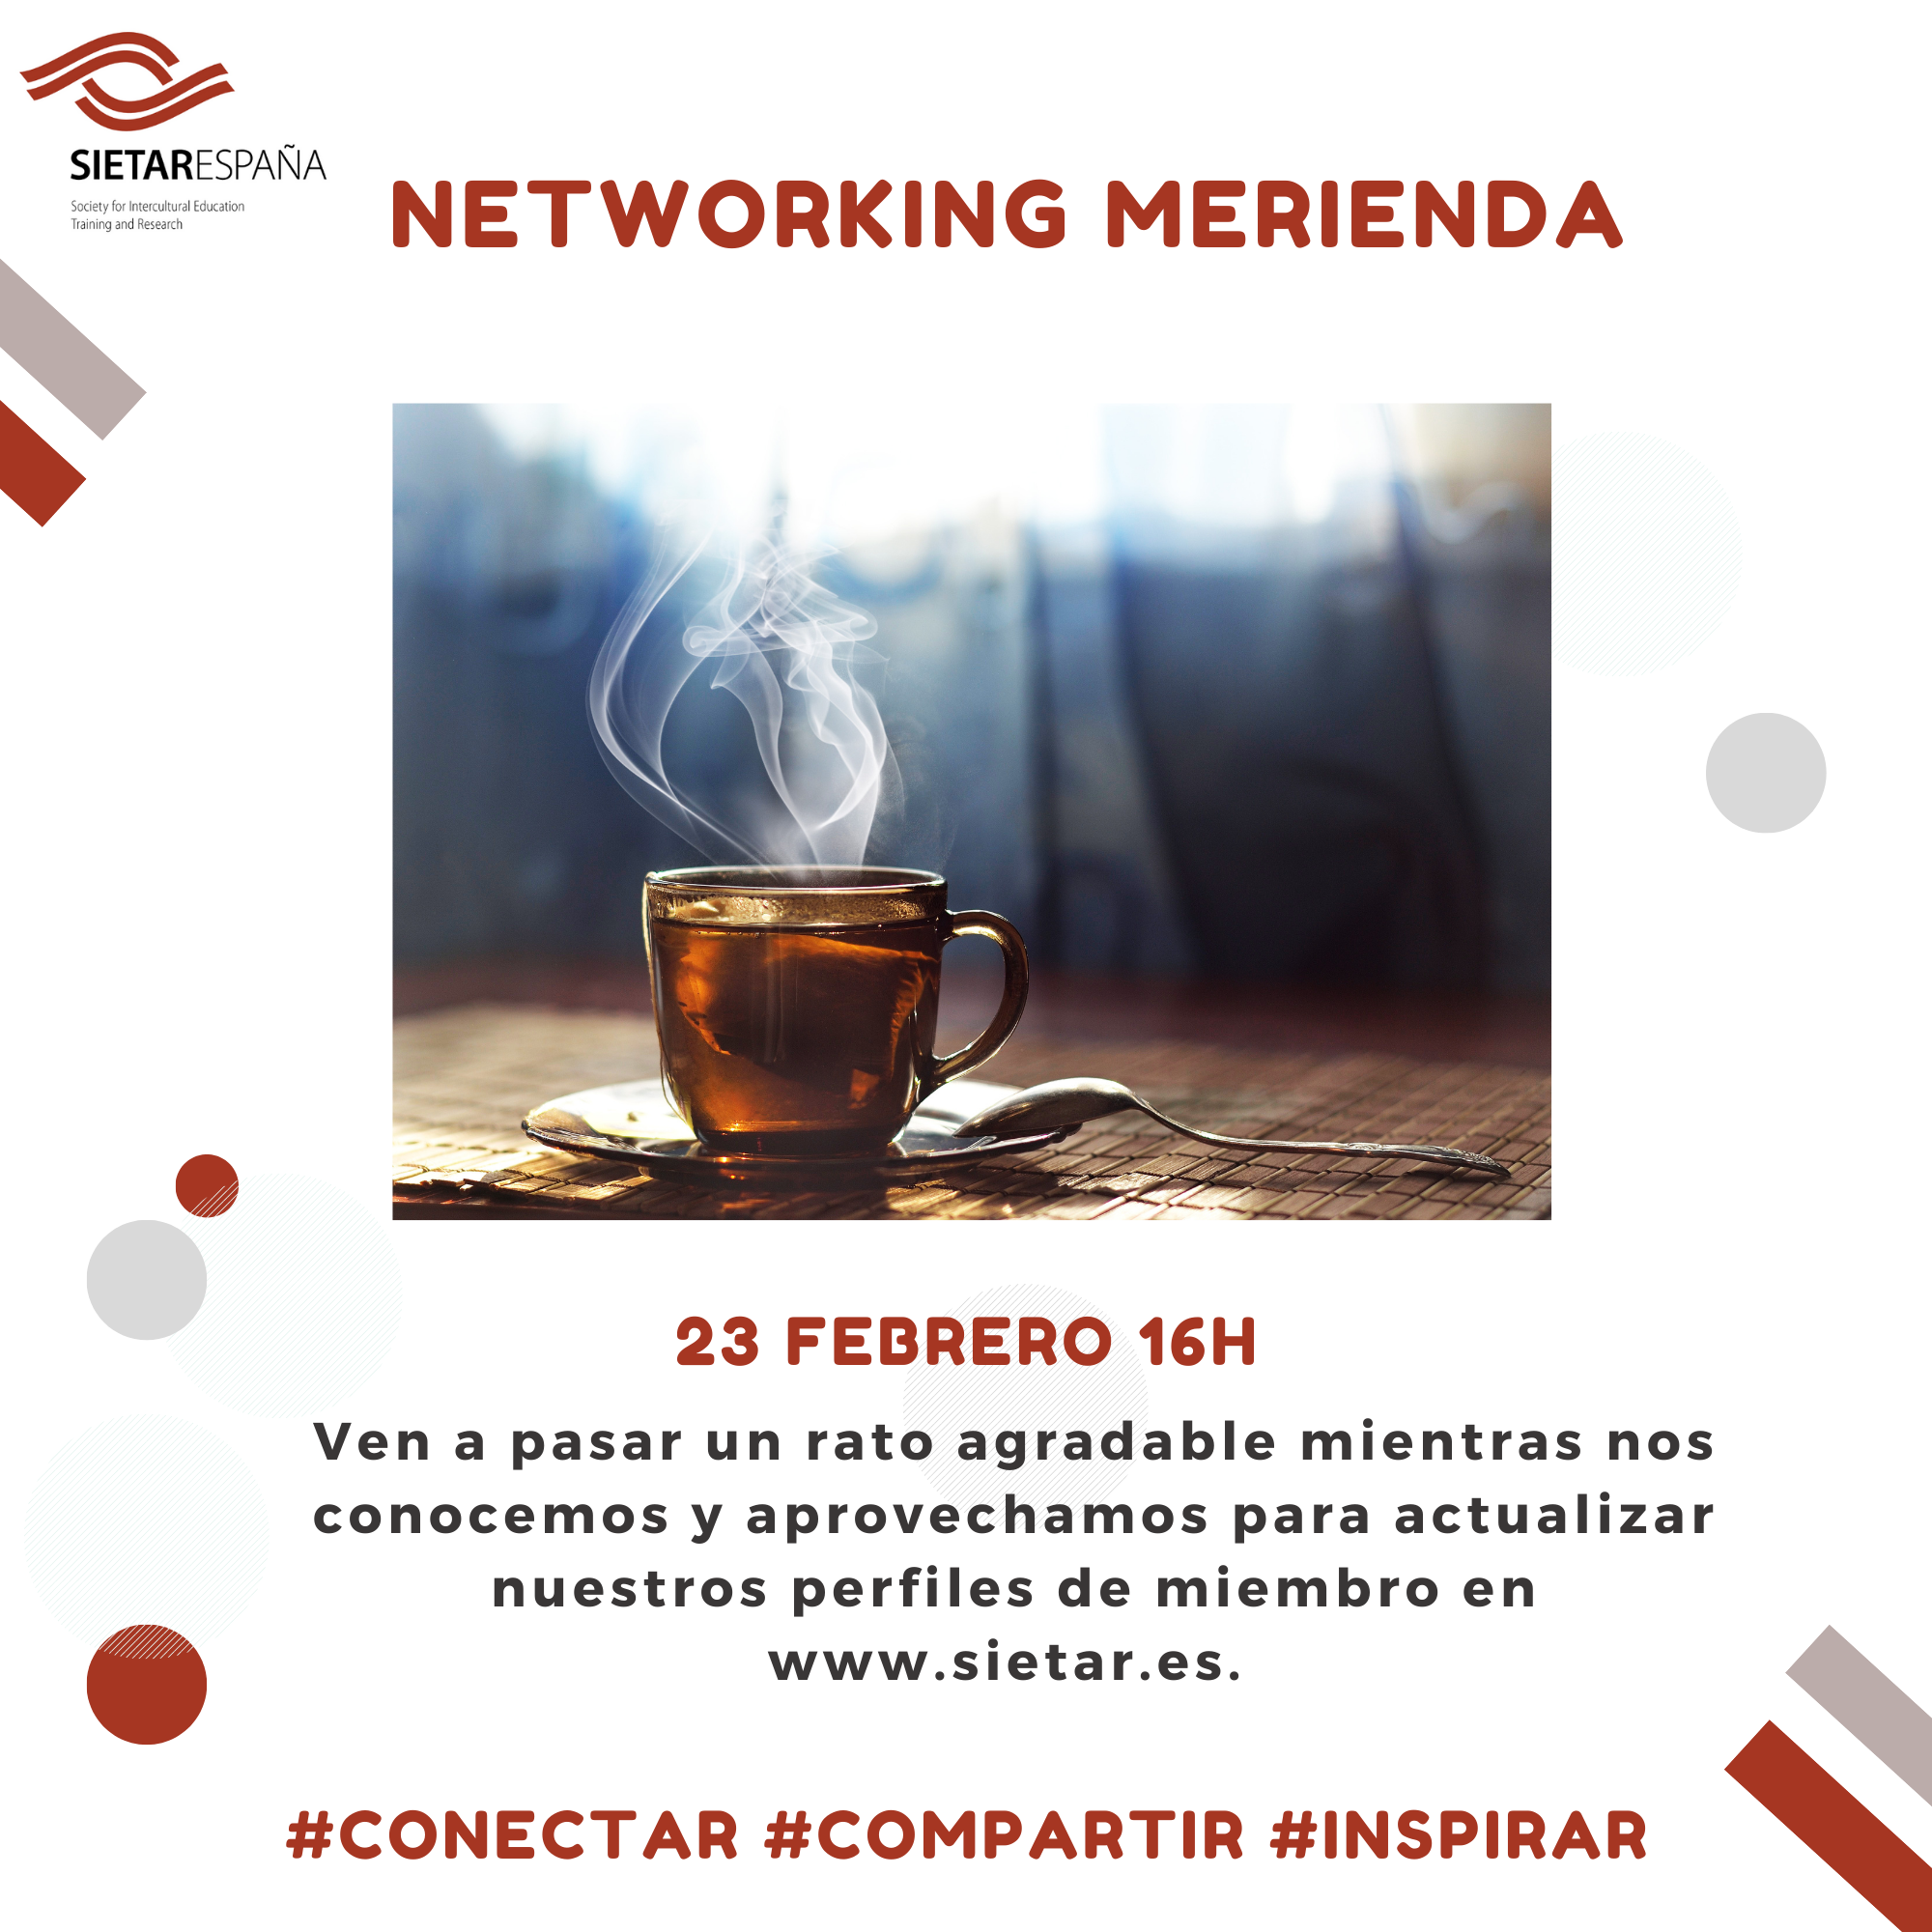 Networking Merienda